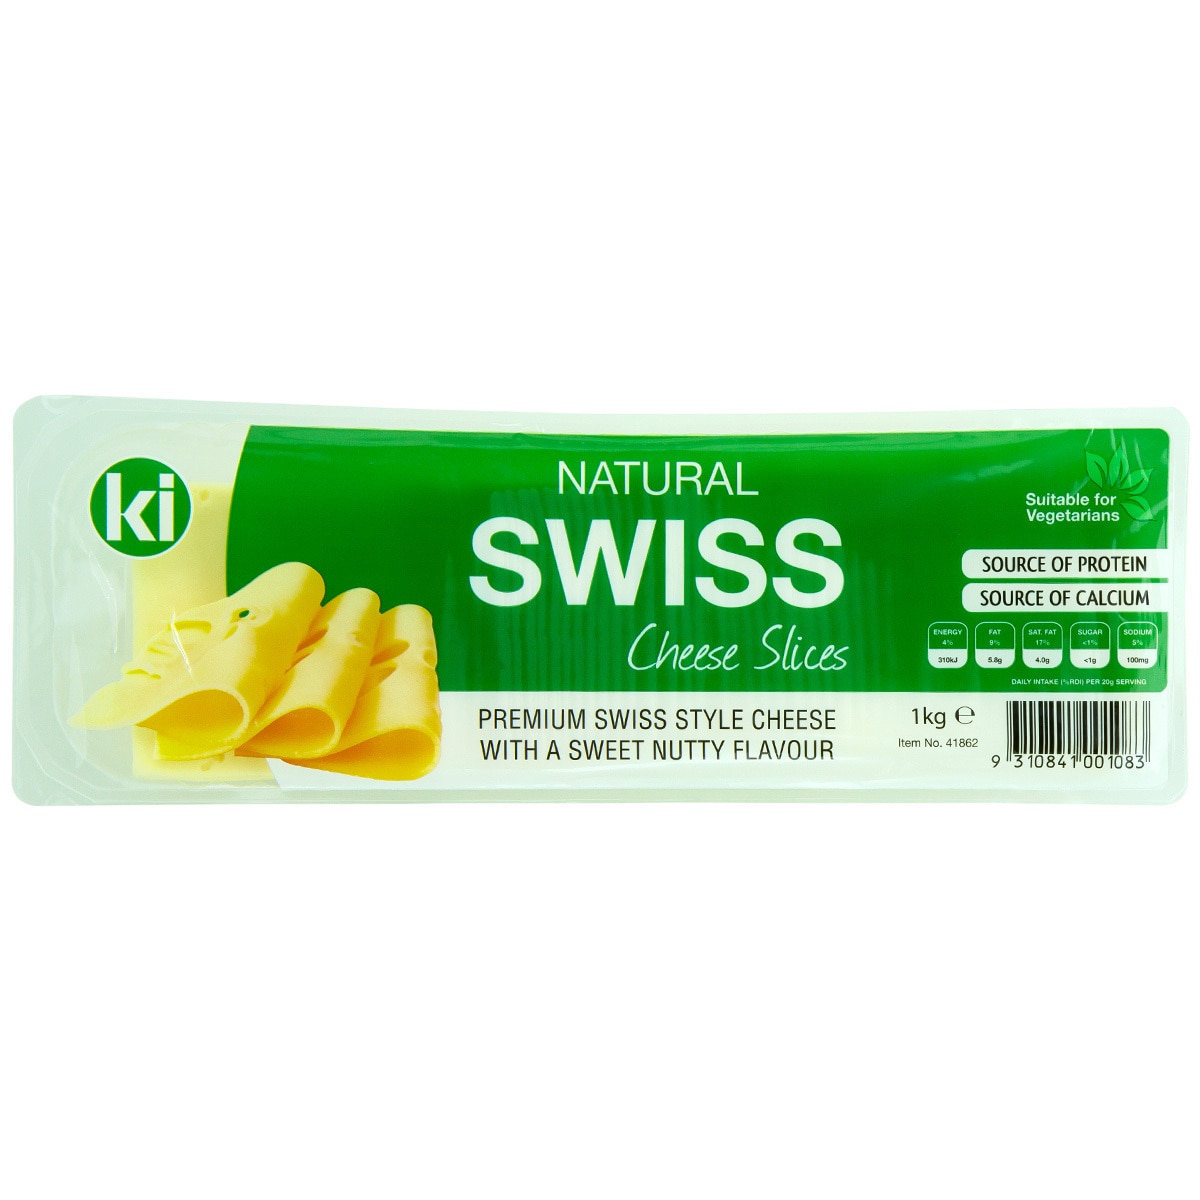 KI Natural Swiss Cheese Slices 1kg